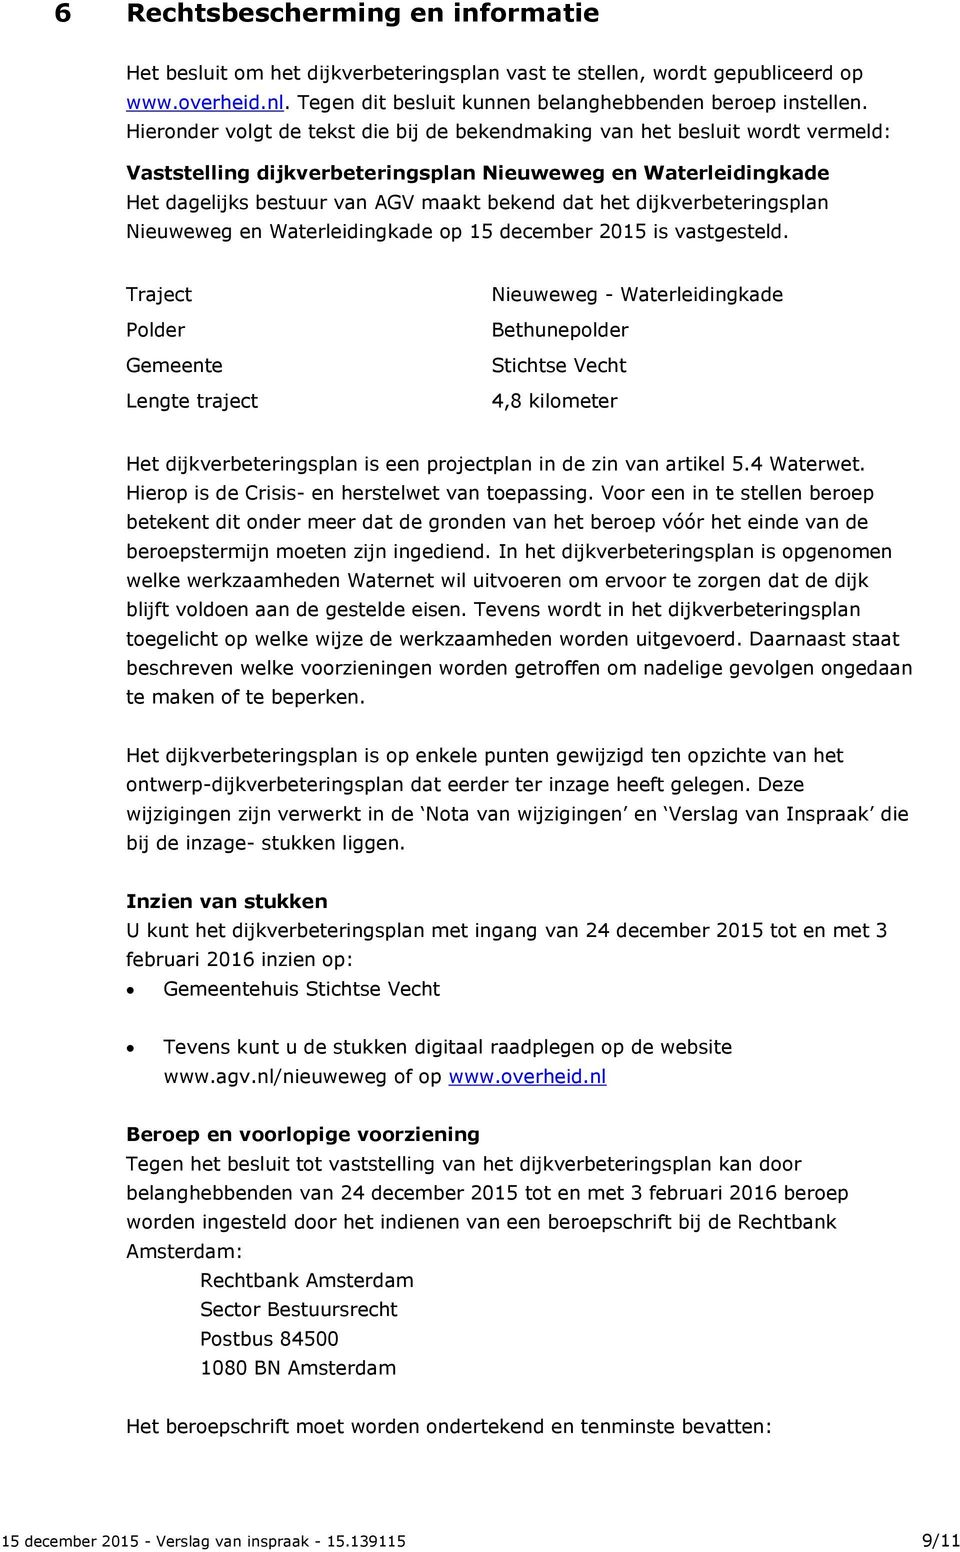 dijkverbeteringsplan Nieuweweg en Waterleidingkade op 15 december 2015 is vastgesteld.